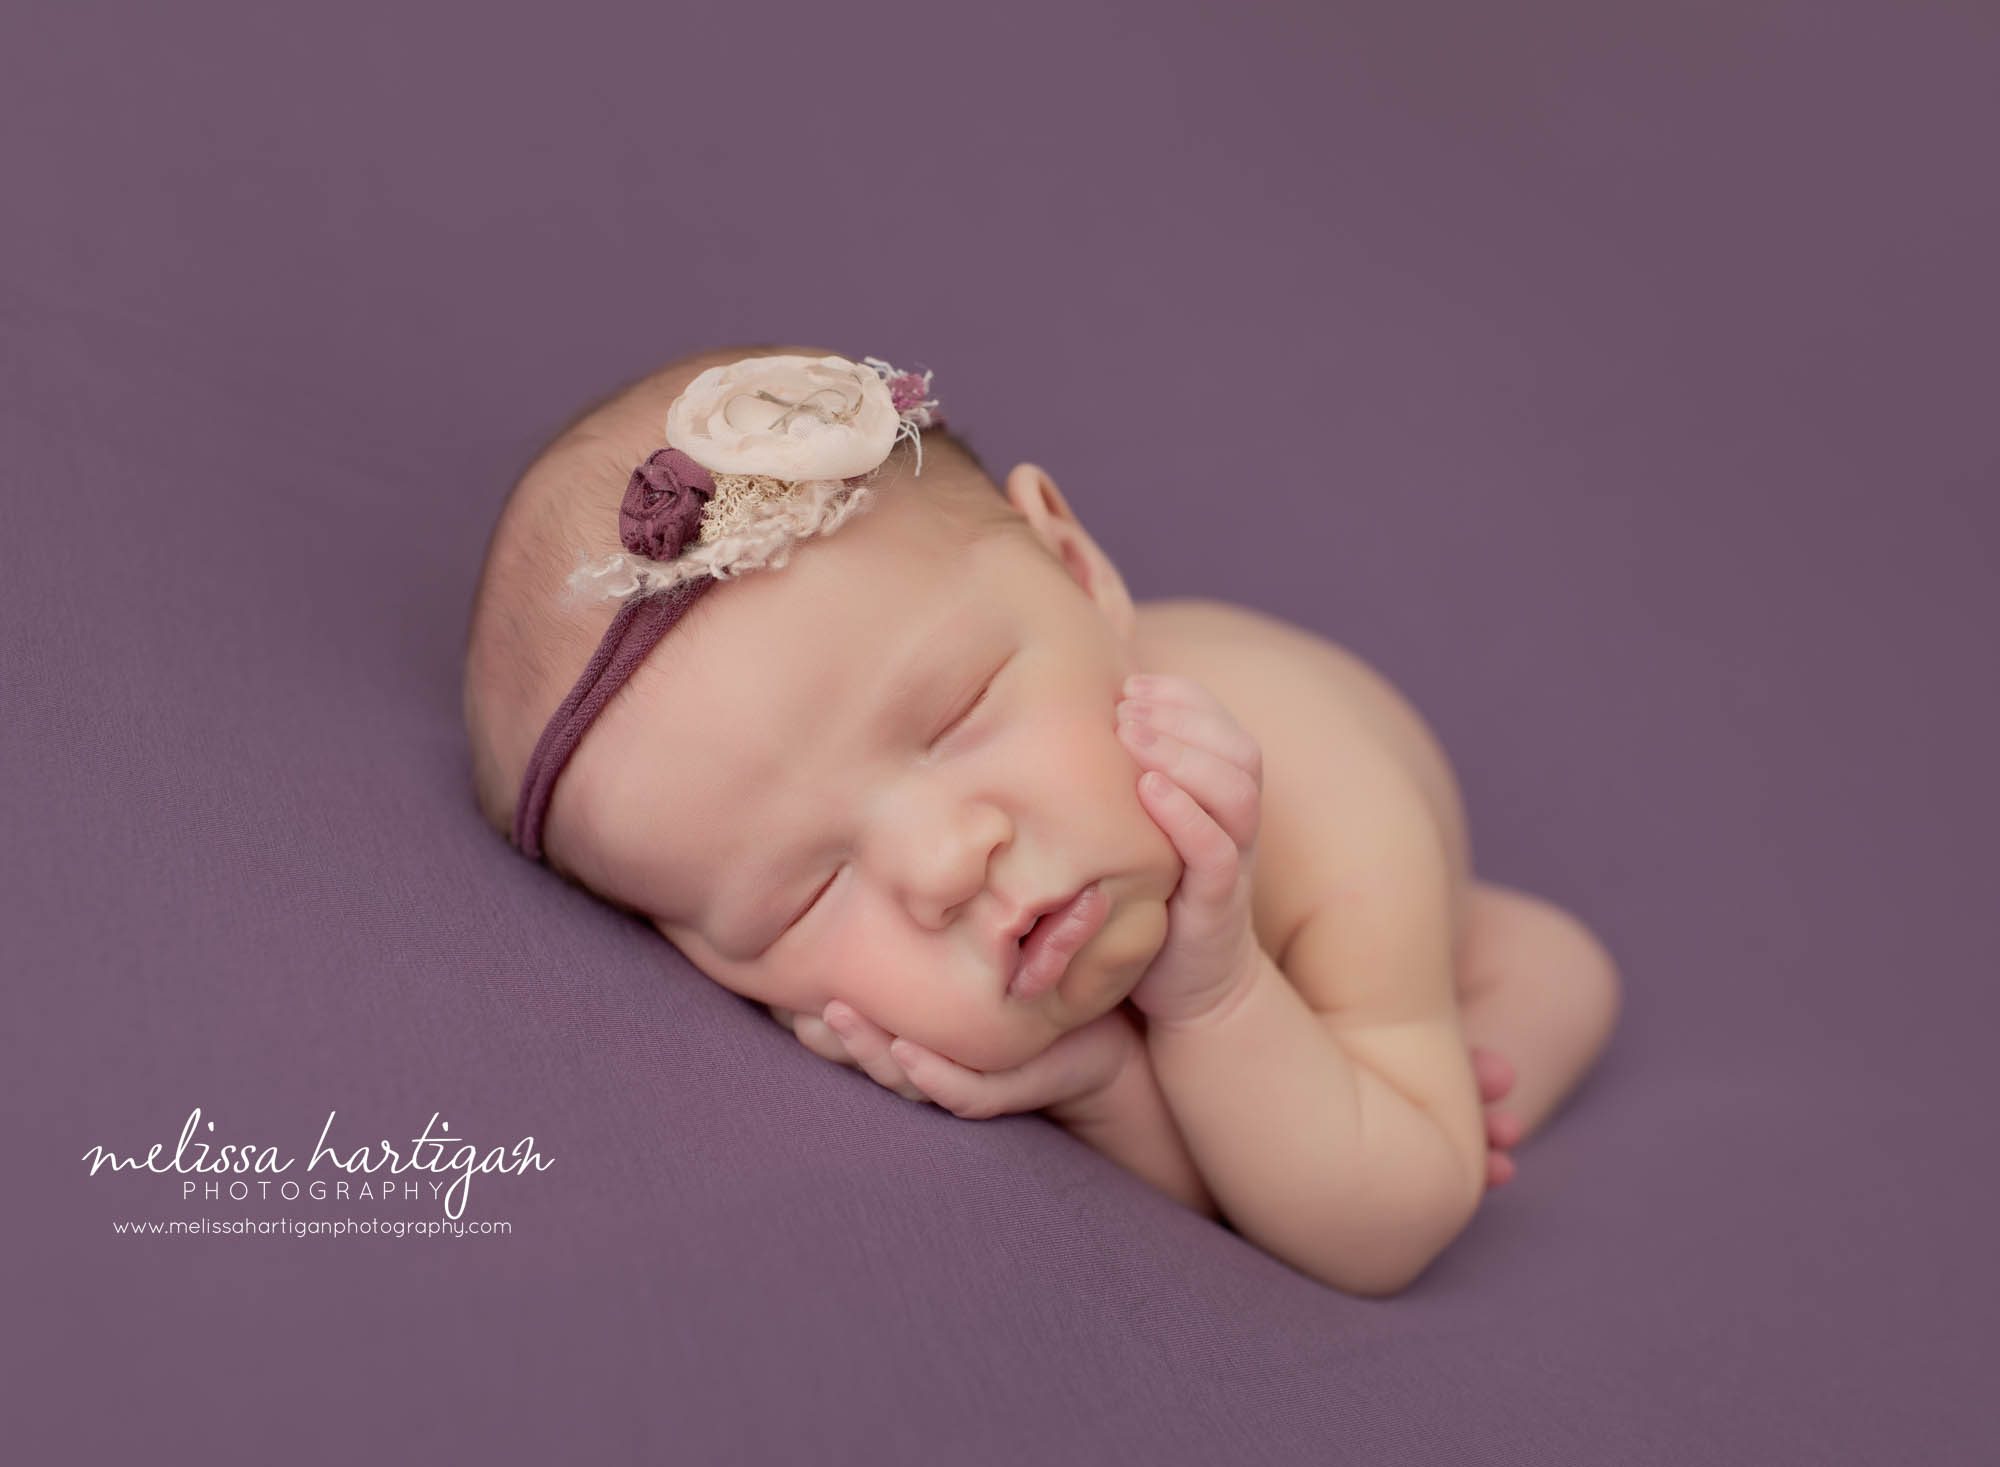 newborn baby girl posed on side on purple backdrop with pretty headband